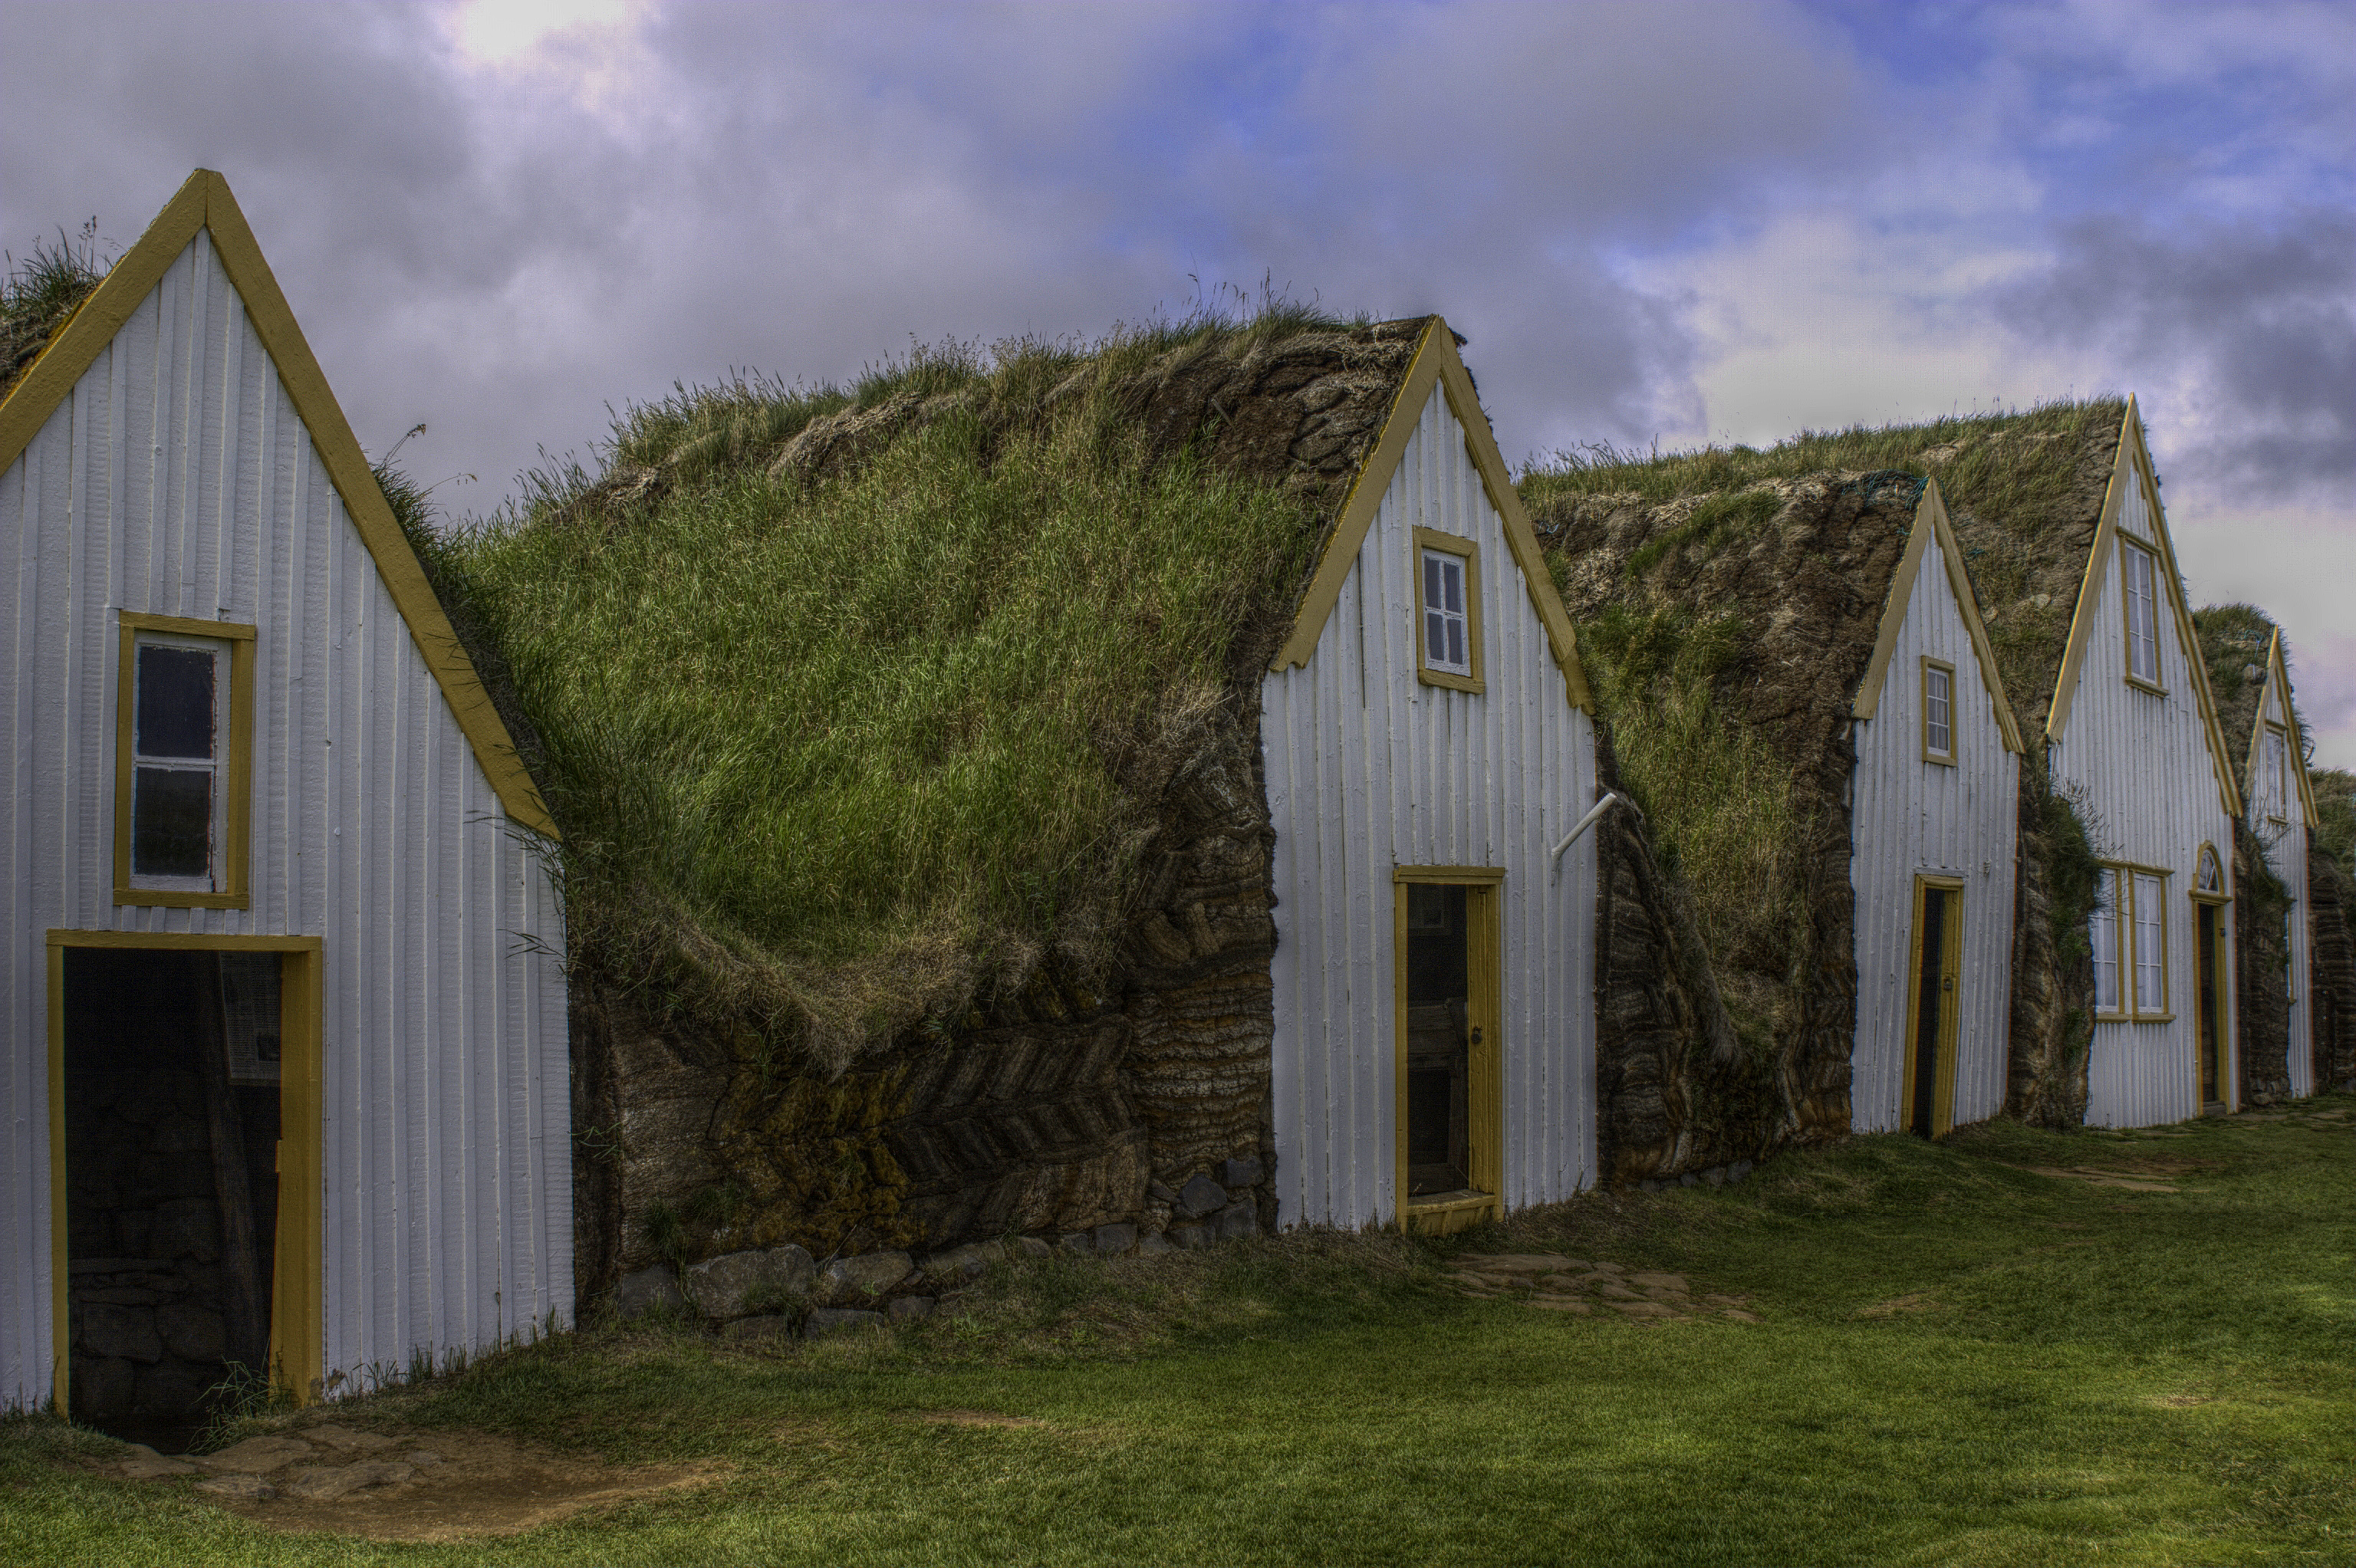 File:Icelandic turf houses.jpg - Wikimedia Commons